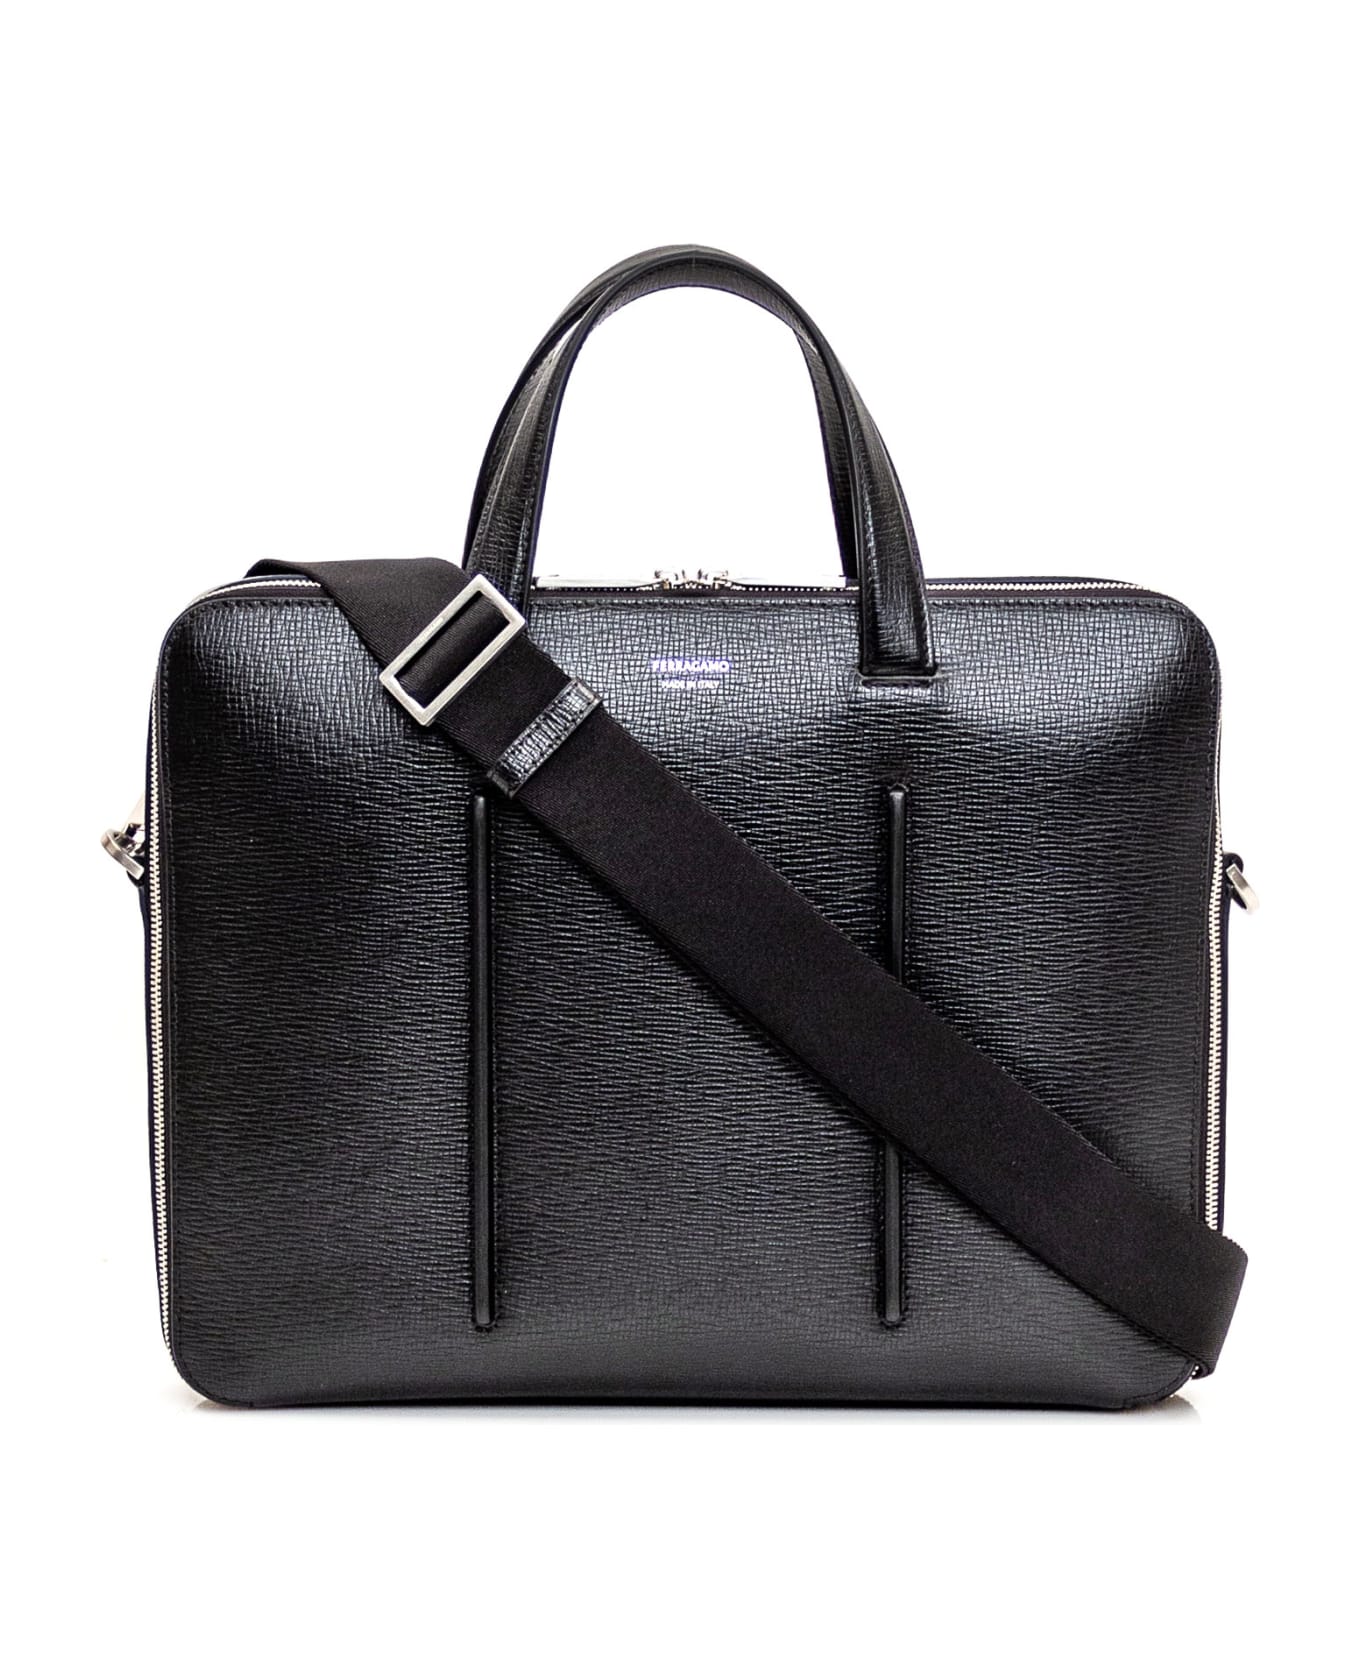 Ferragamo Business Bag With Single Compartment - NERO トラベルバッグ